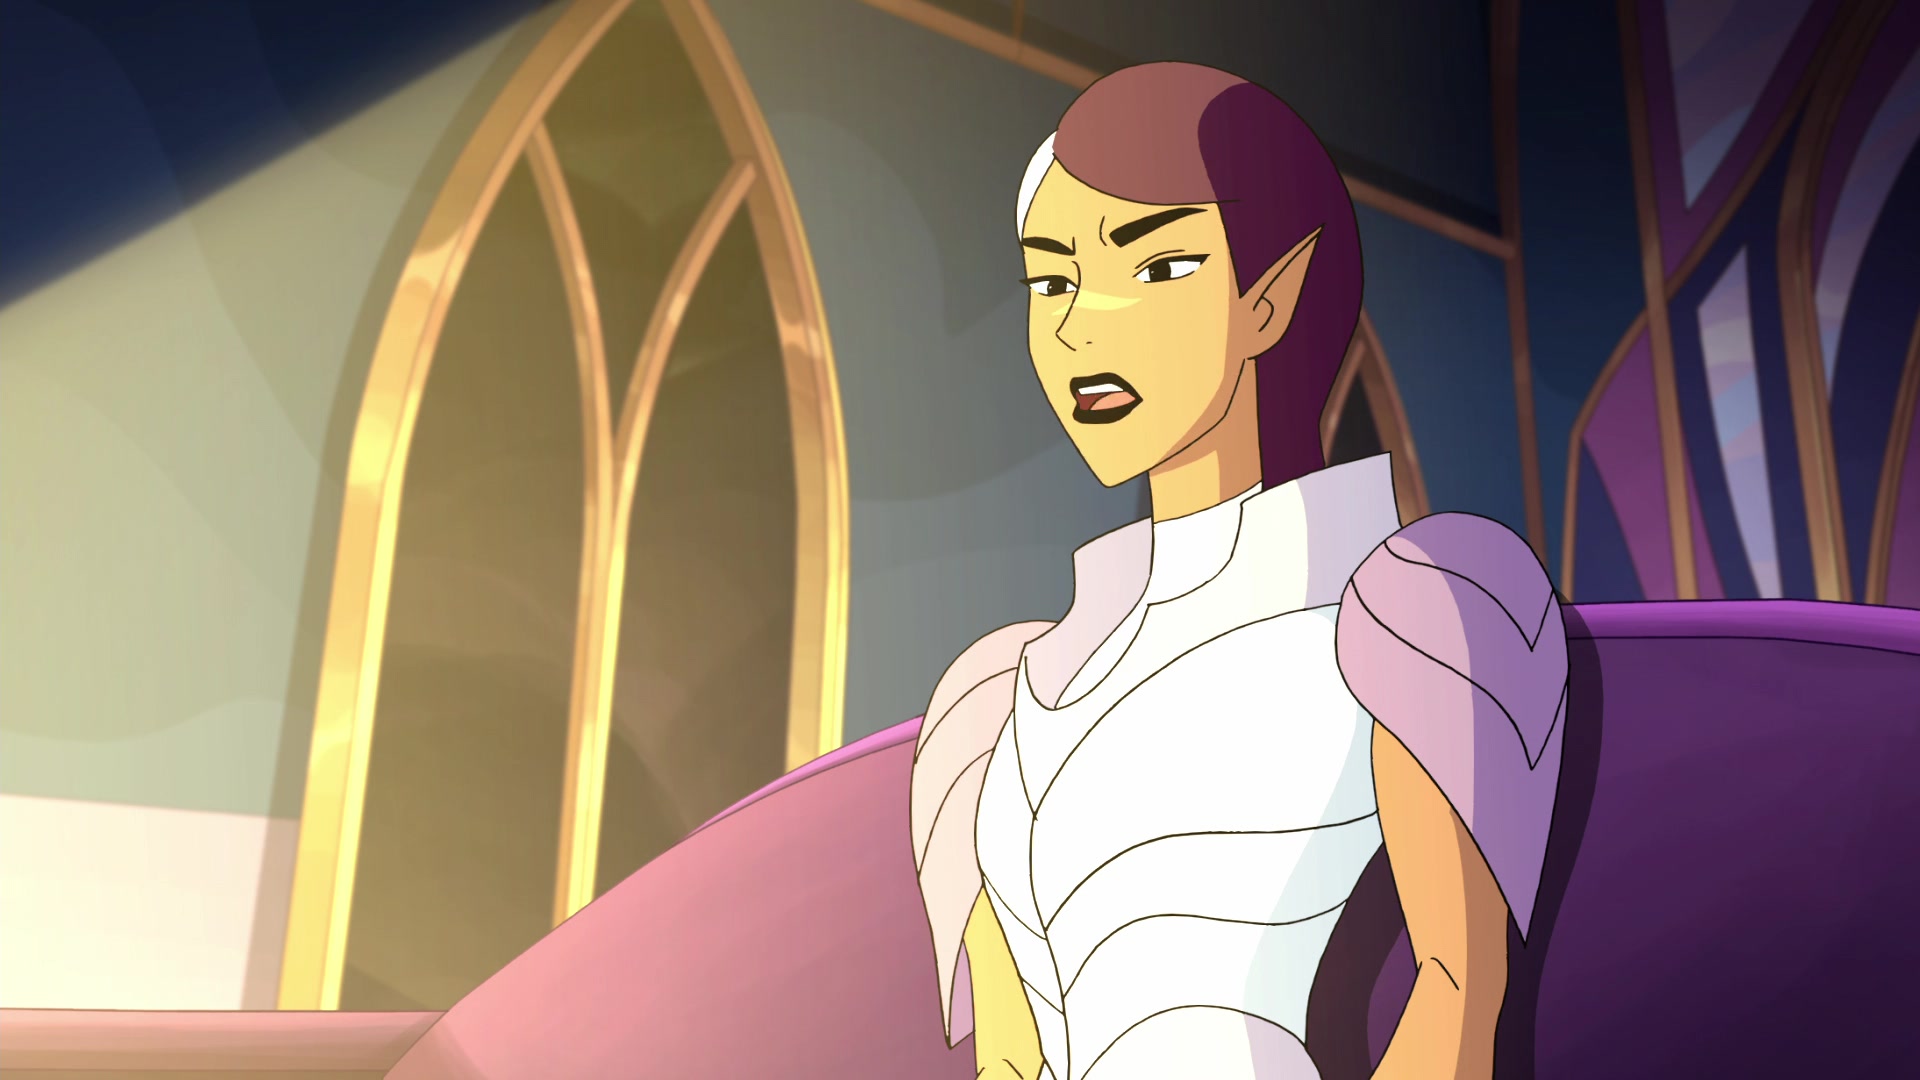 She-Ra and the Princesses of Power S04E07